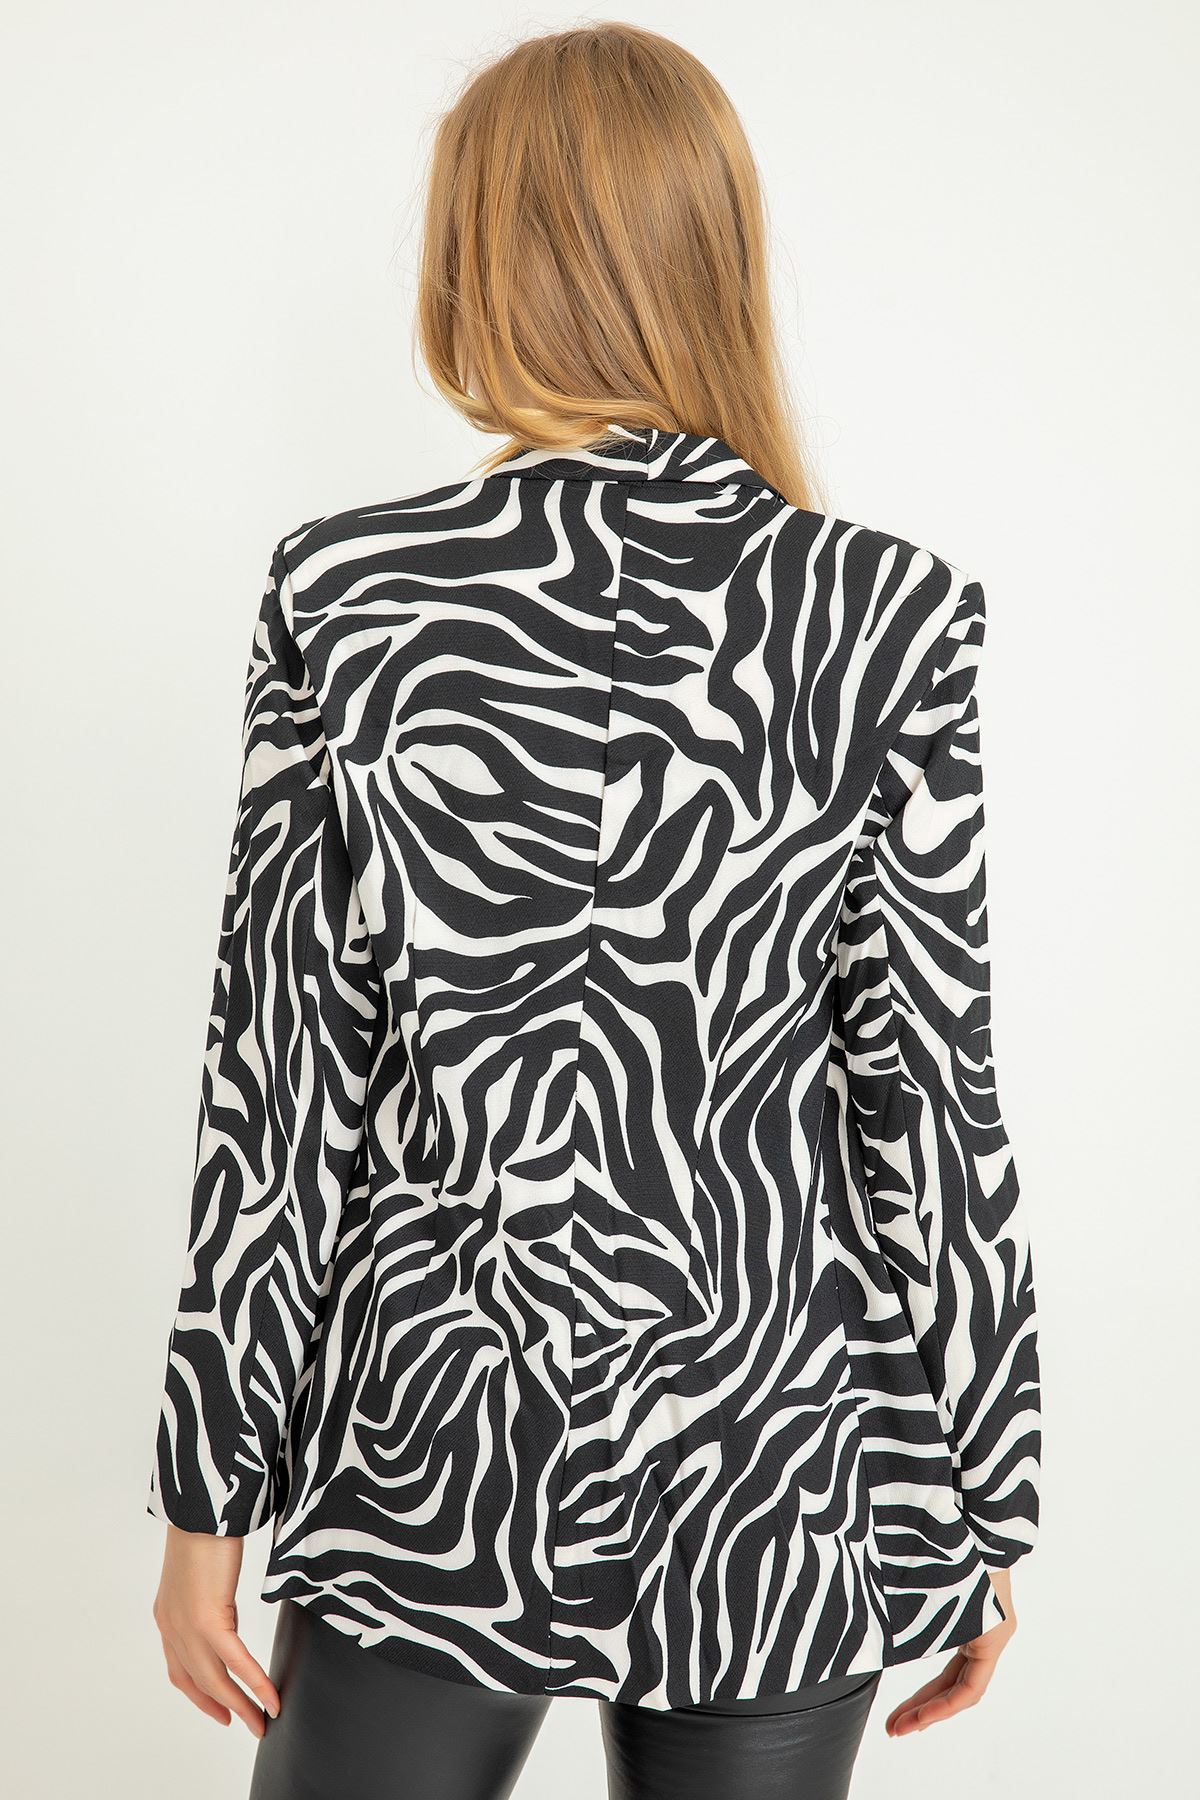 Atlas Fabric Wing Collar Below Hip Zebra Print Blazer Women Jacket - Black